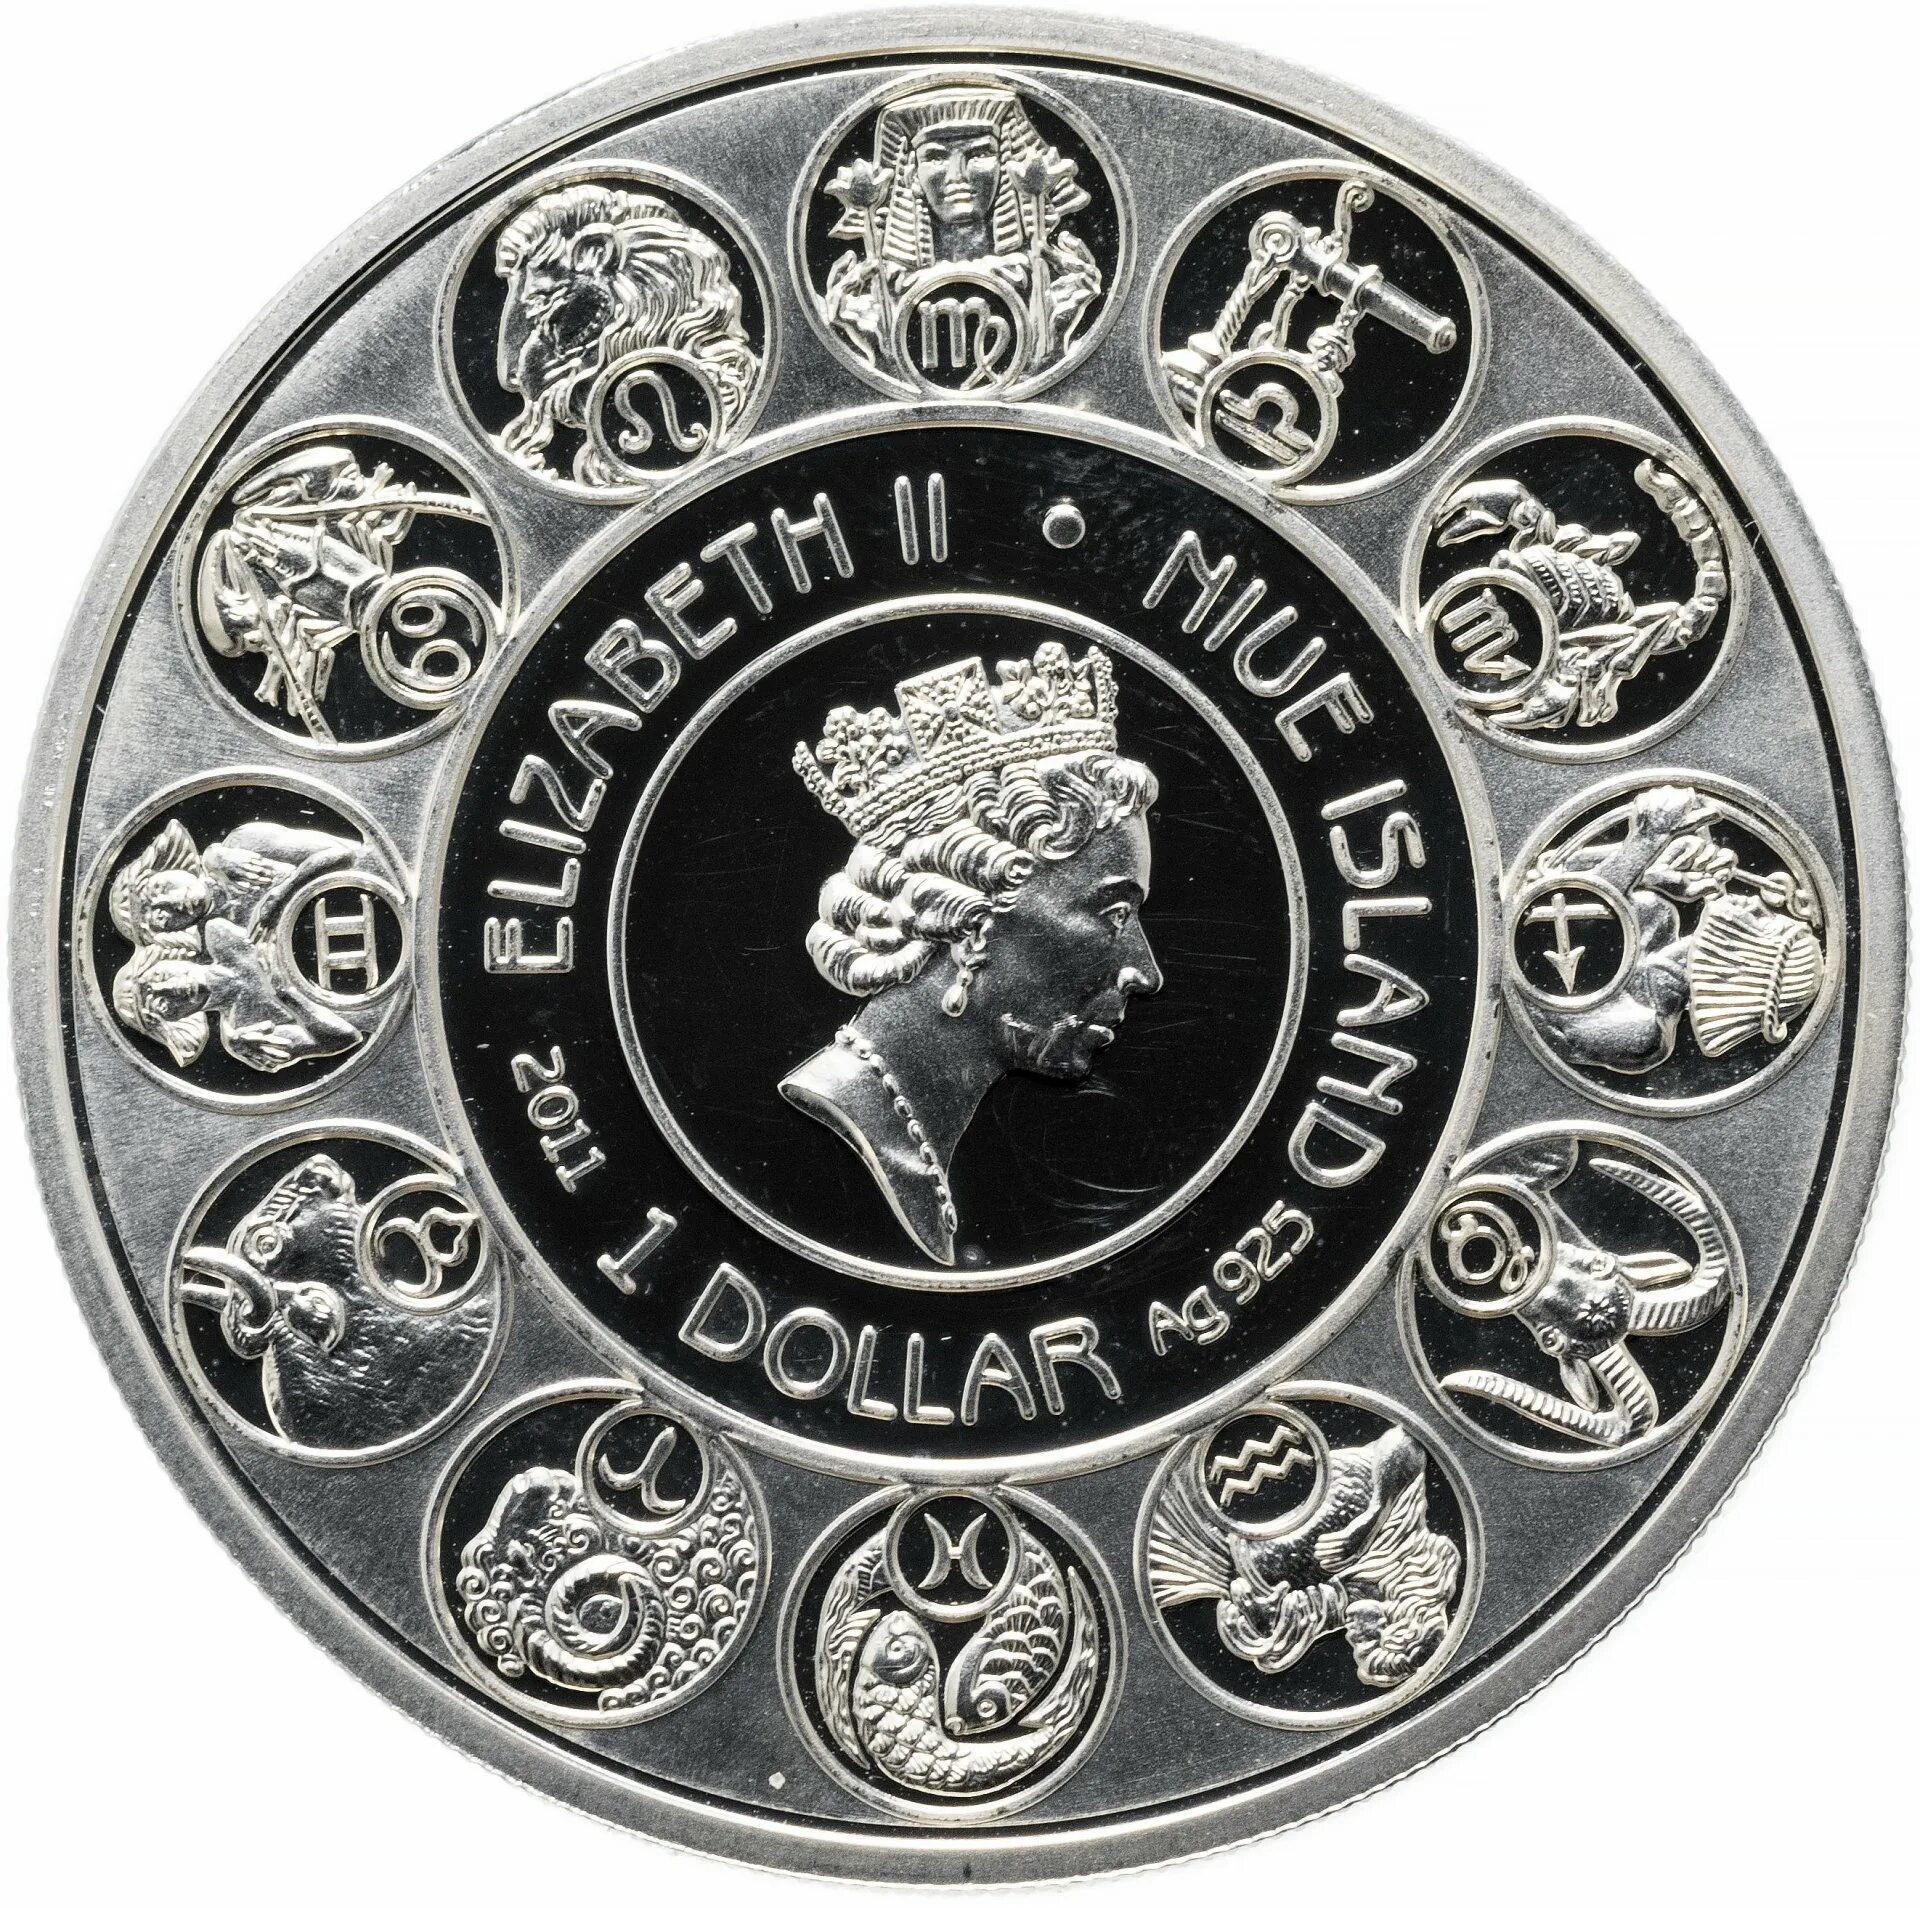 Ниуэ 1 доллар, 2010 знаки зодиака - Козерог. Монеты серебро острова Ниуэ. Монеты знаки зодиака. Ниуэ 1 доллар, 2014 знаки зодиака. Монета знак зодиака купить